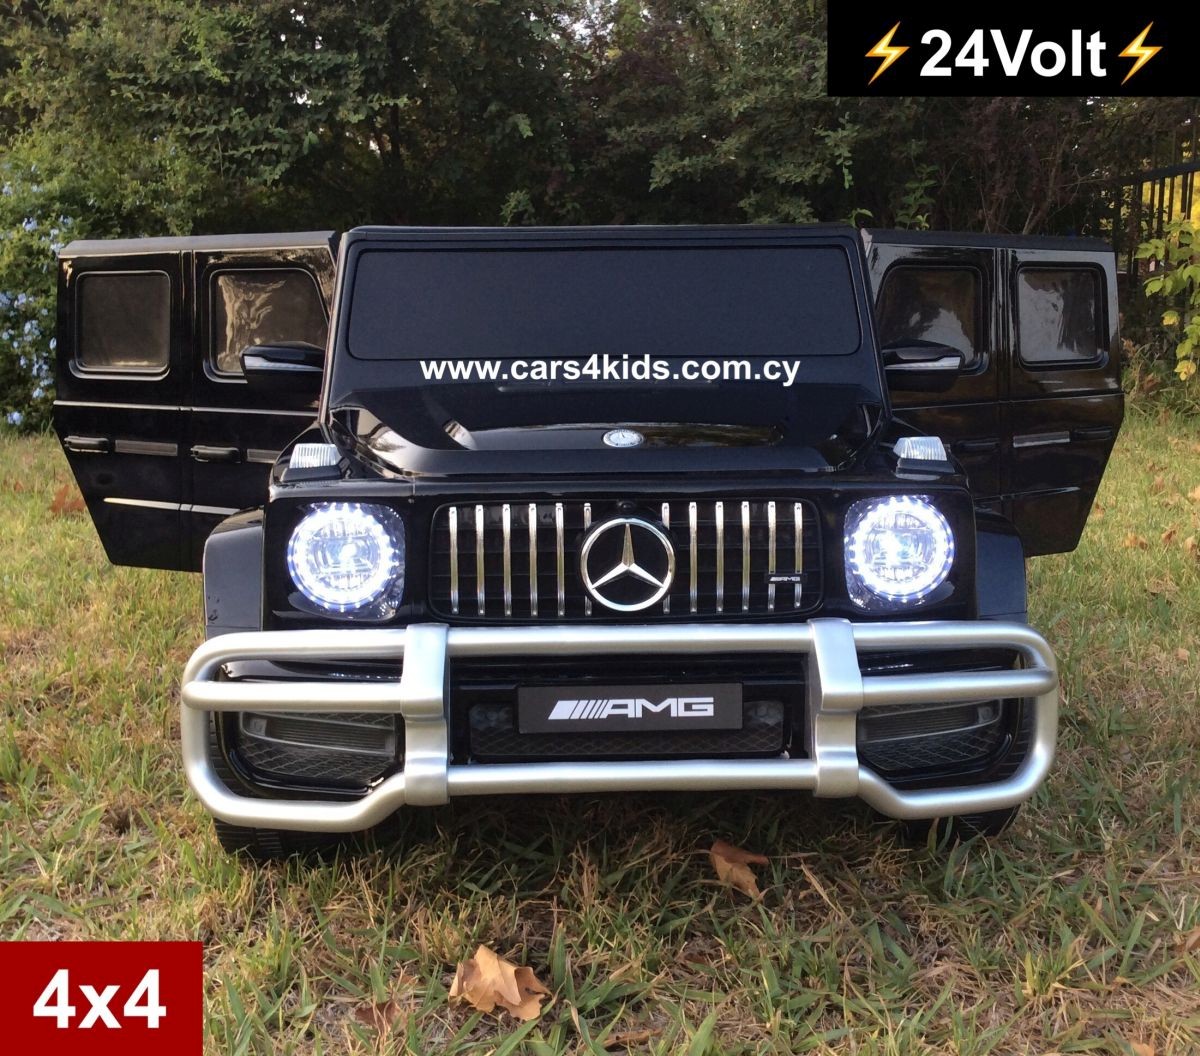 24Volt Mercedes-Benz G63 Painting Black with 2.4G R/C under License